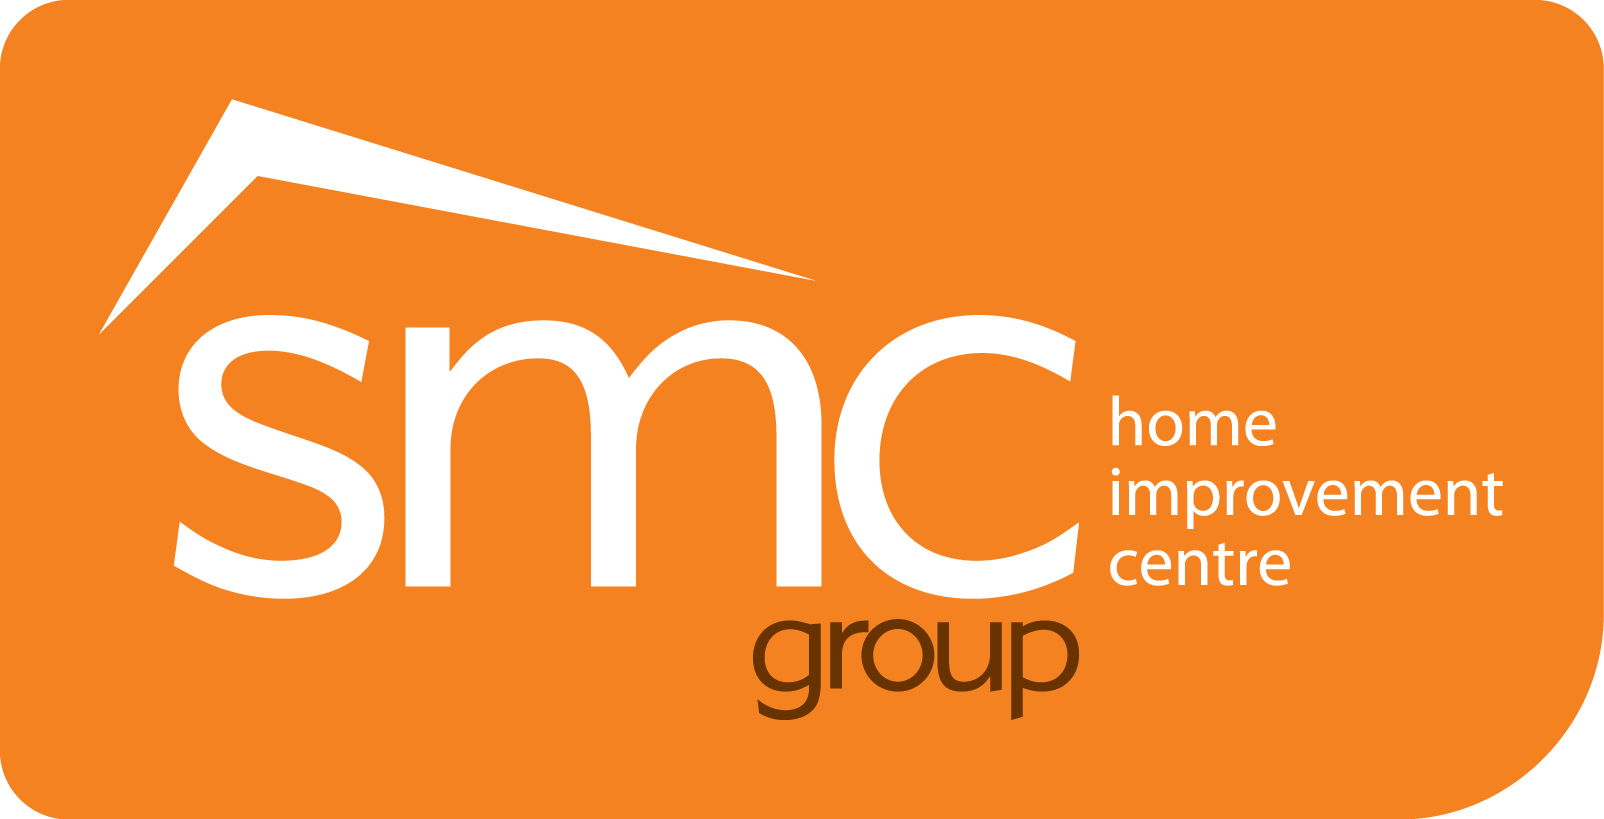 SMC Logo